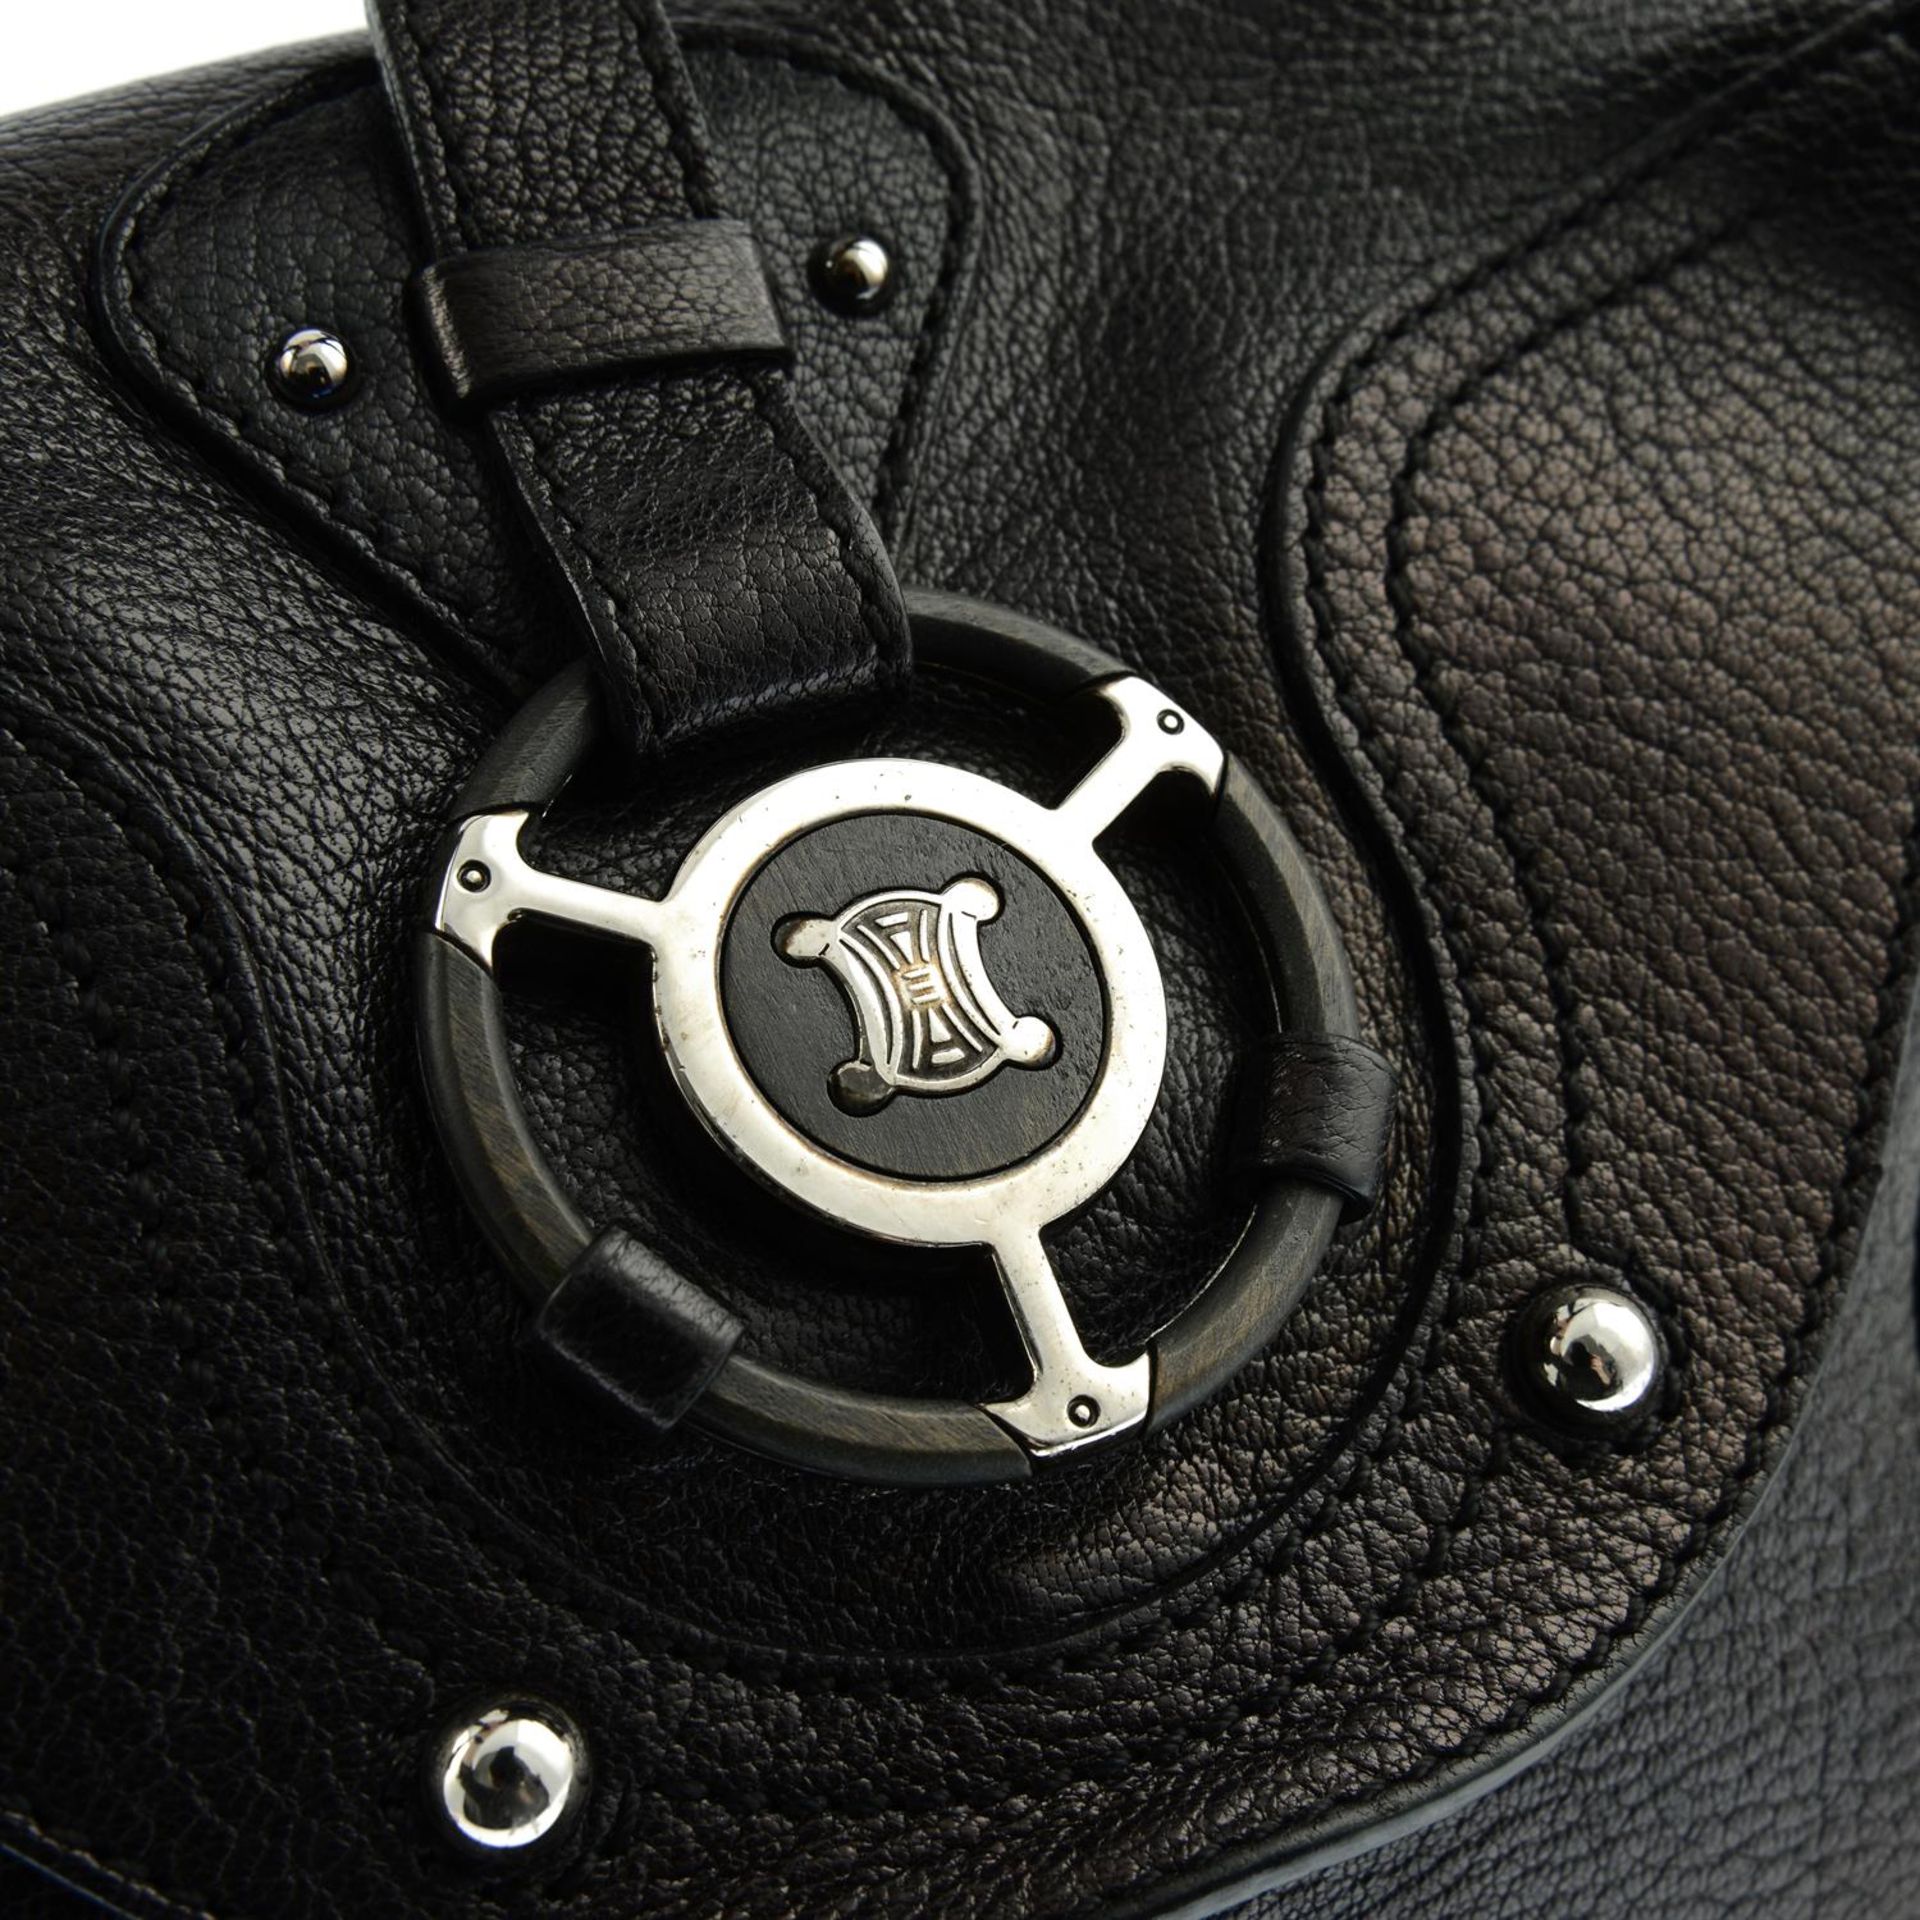 CÉLINE - a black leather handbag. - Image 6 of 6